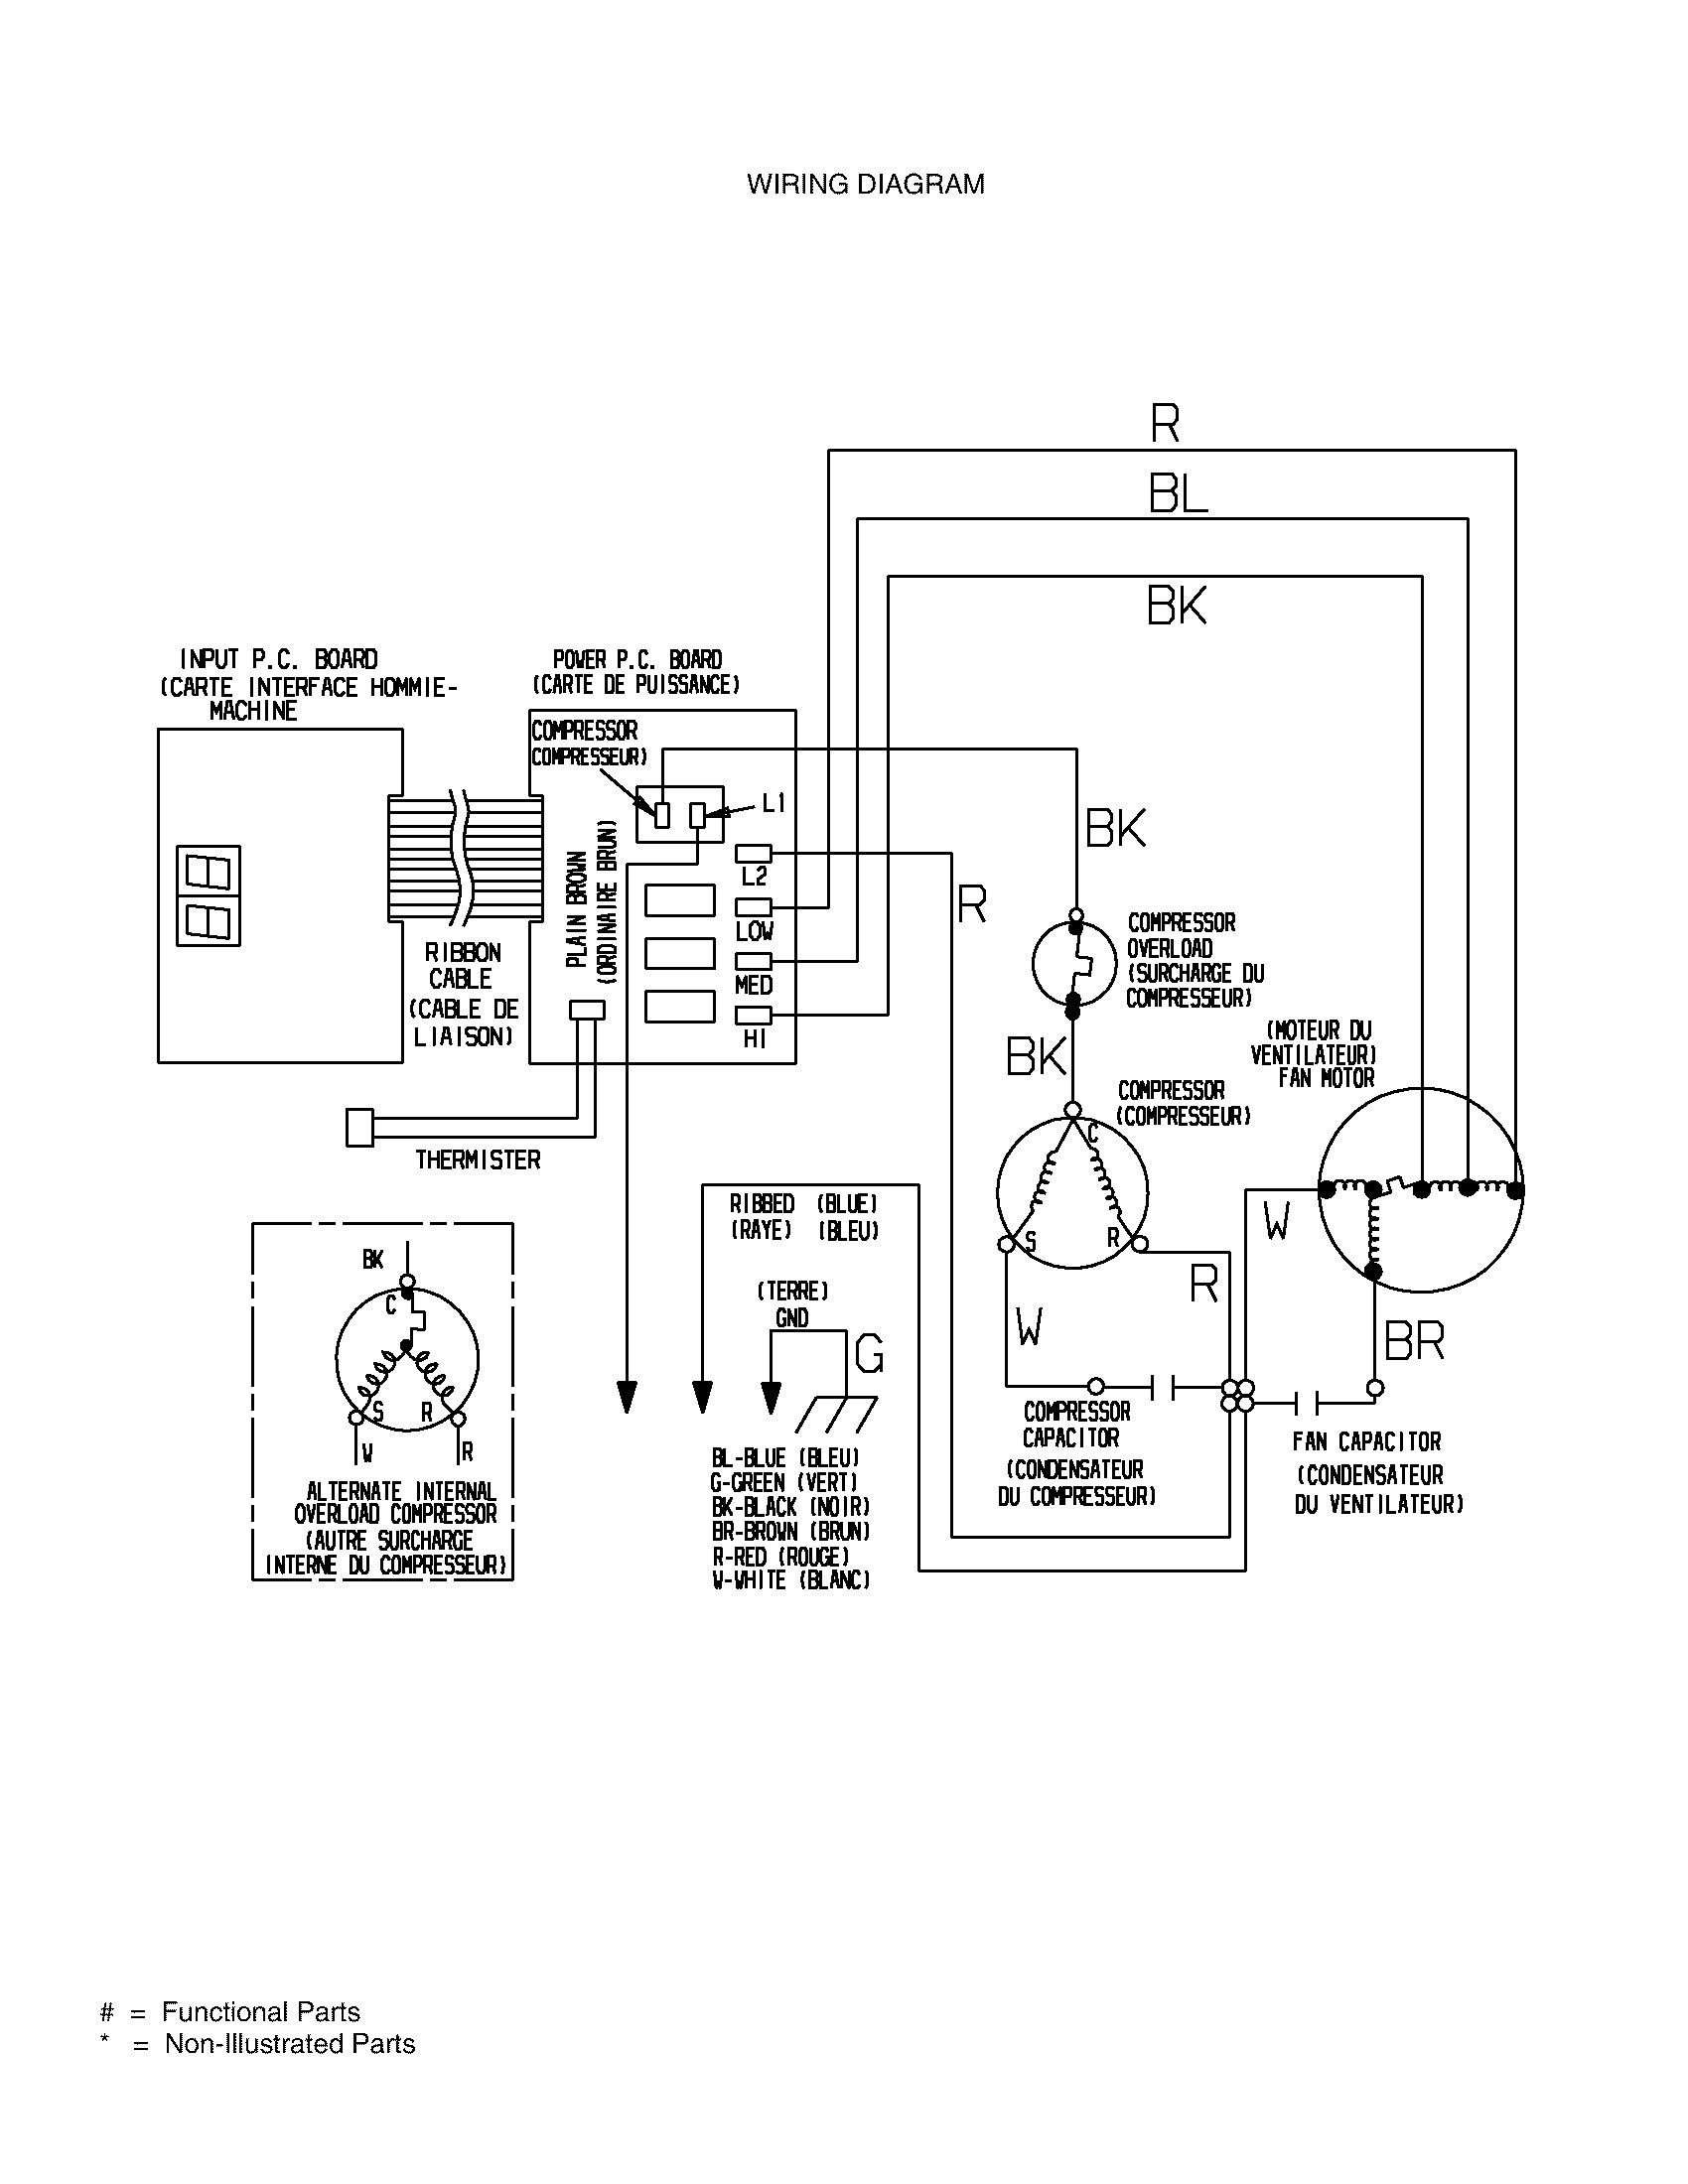 Car Ac Compressor Diagram Wiring Diagram Car Ac New Car Ac Parts Diagram Eugrab New Of Car Ac Compressor Diagram